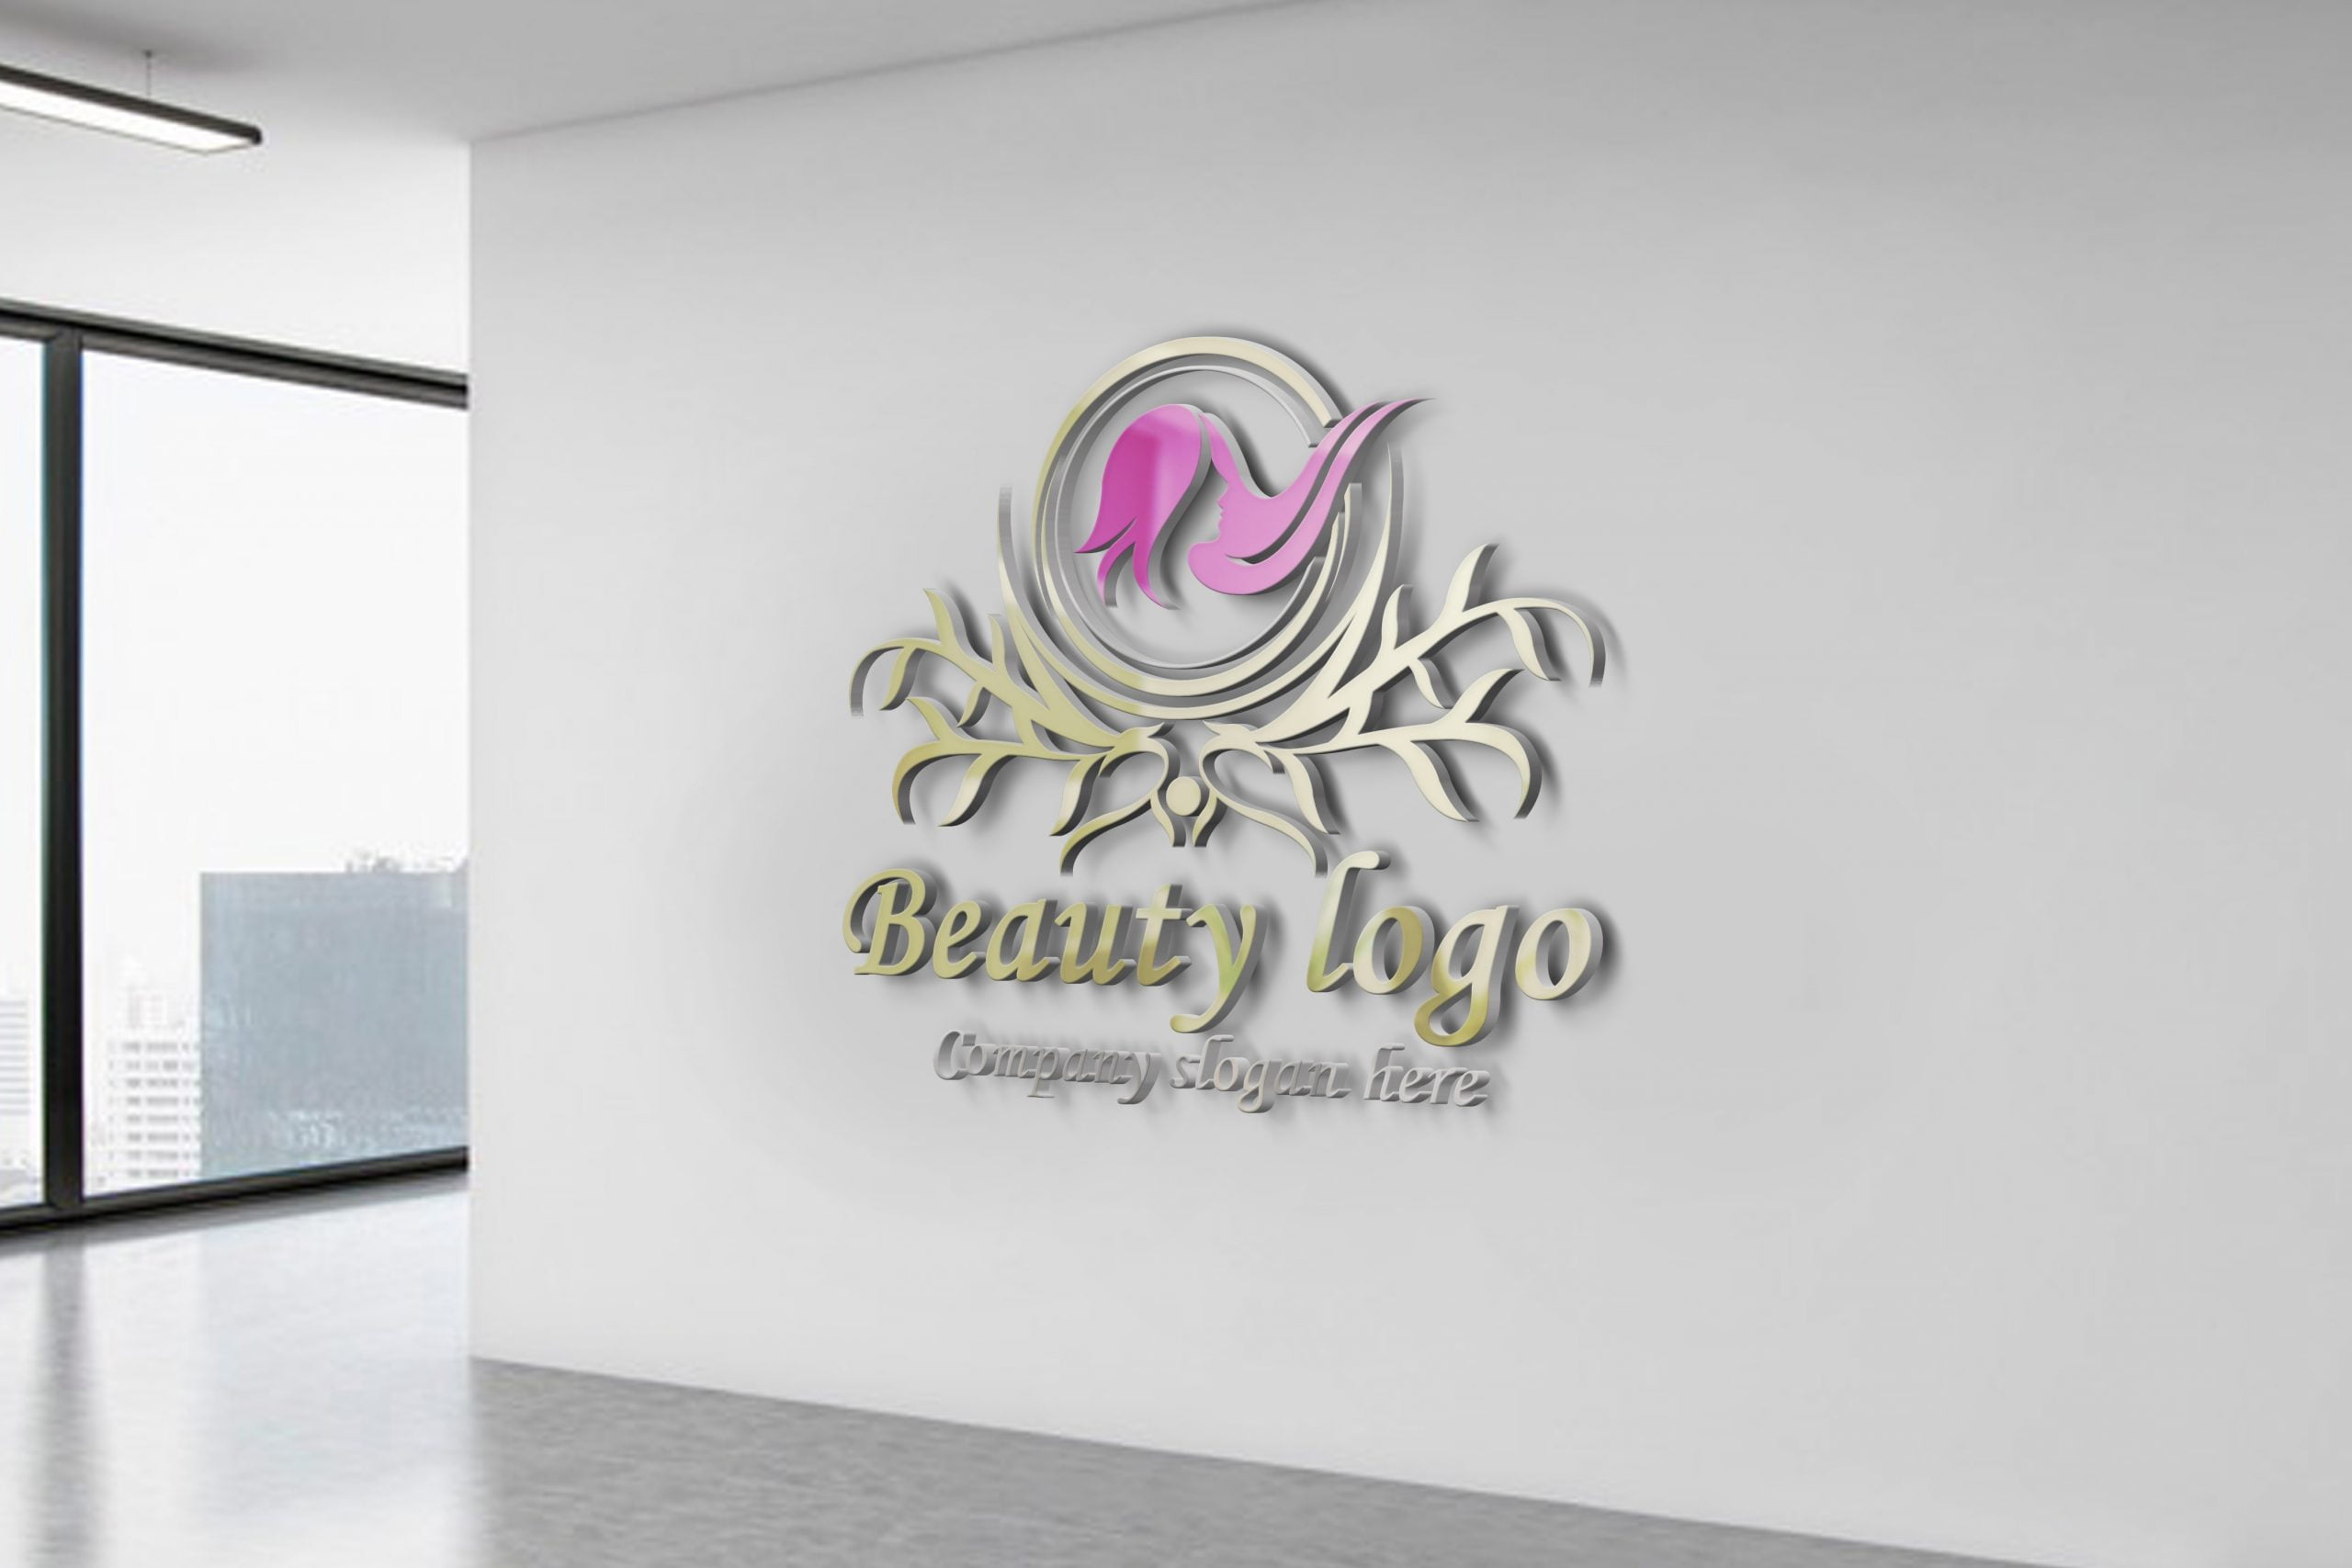 Luxury Beauty Logo Design Tutorial Free on white wall